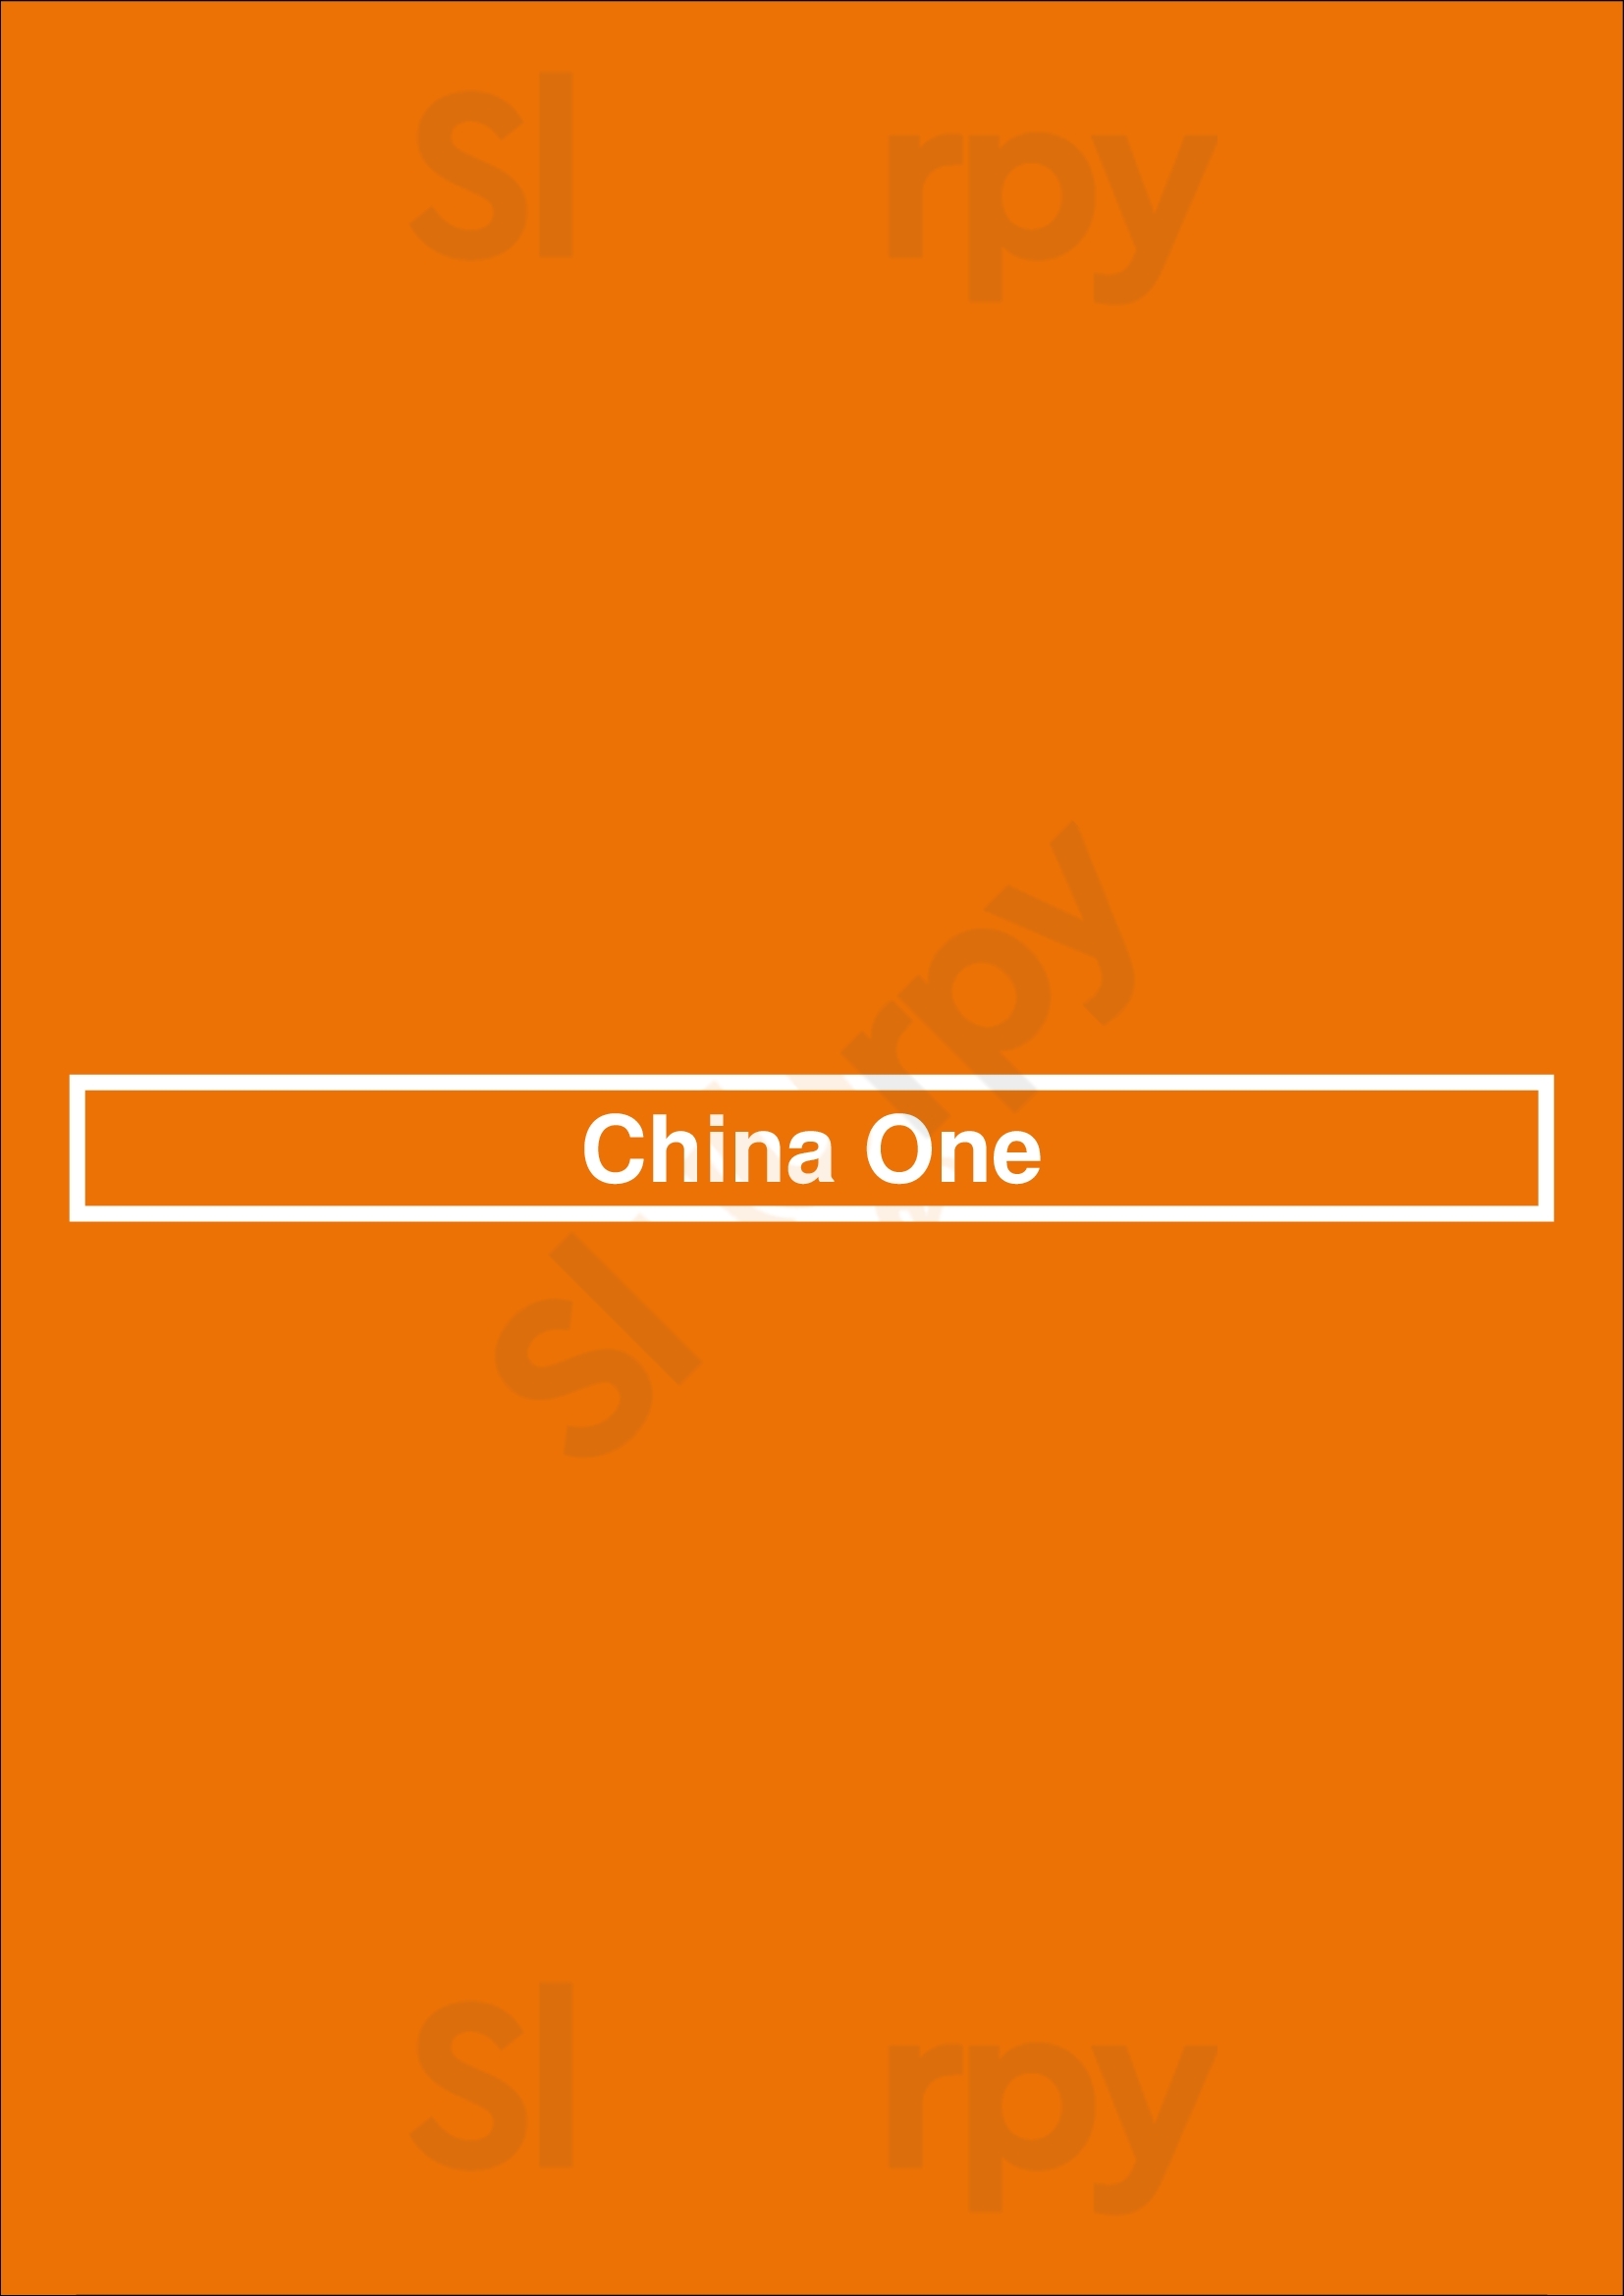 China One Houston Menu - 1